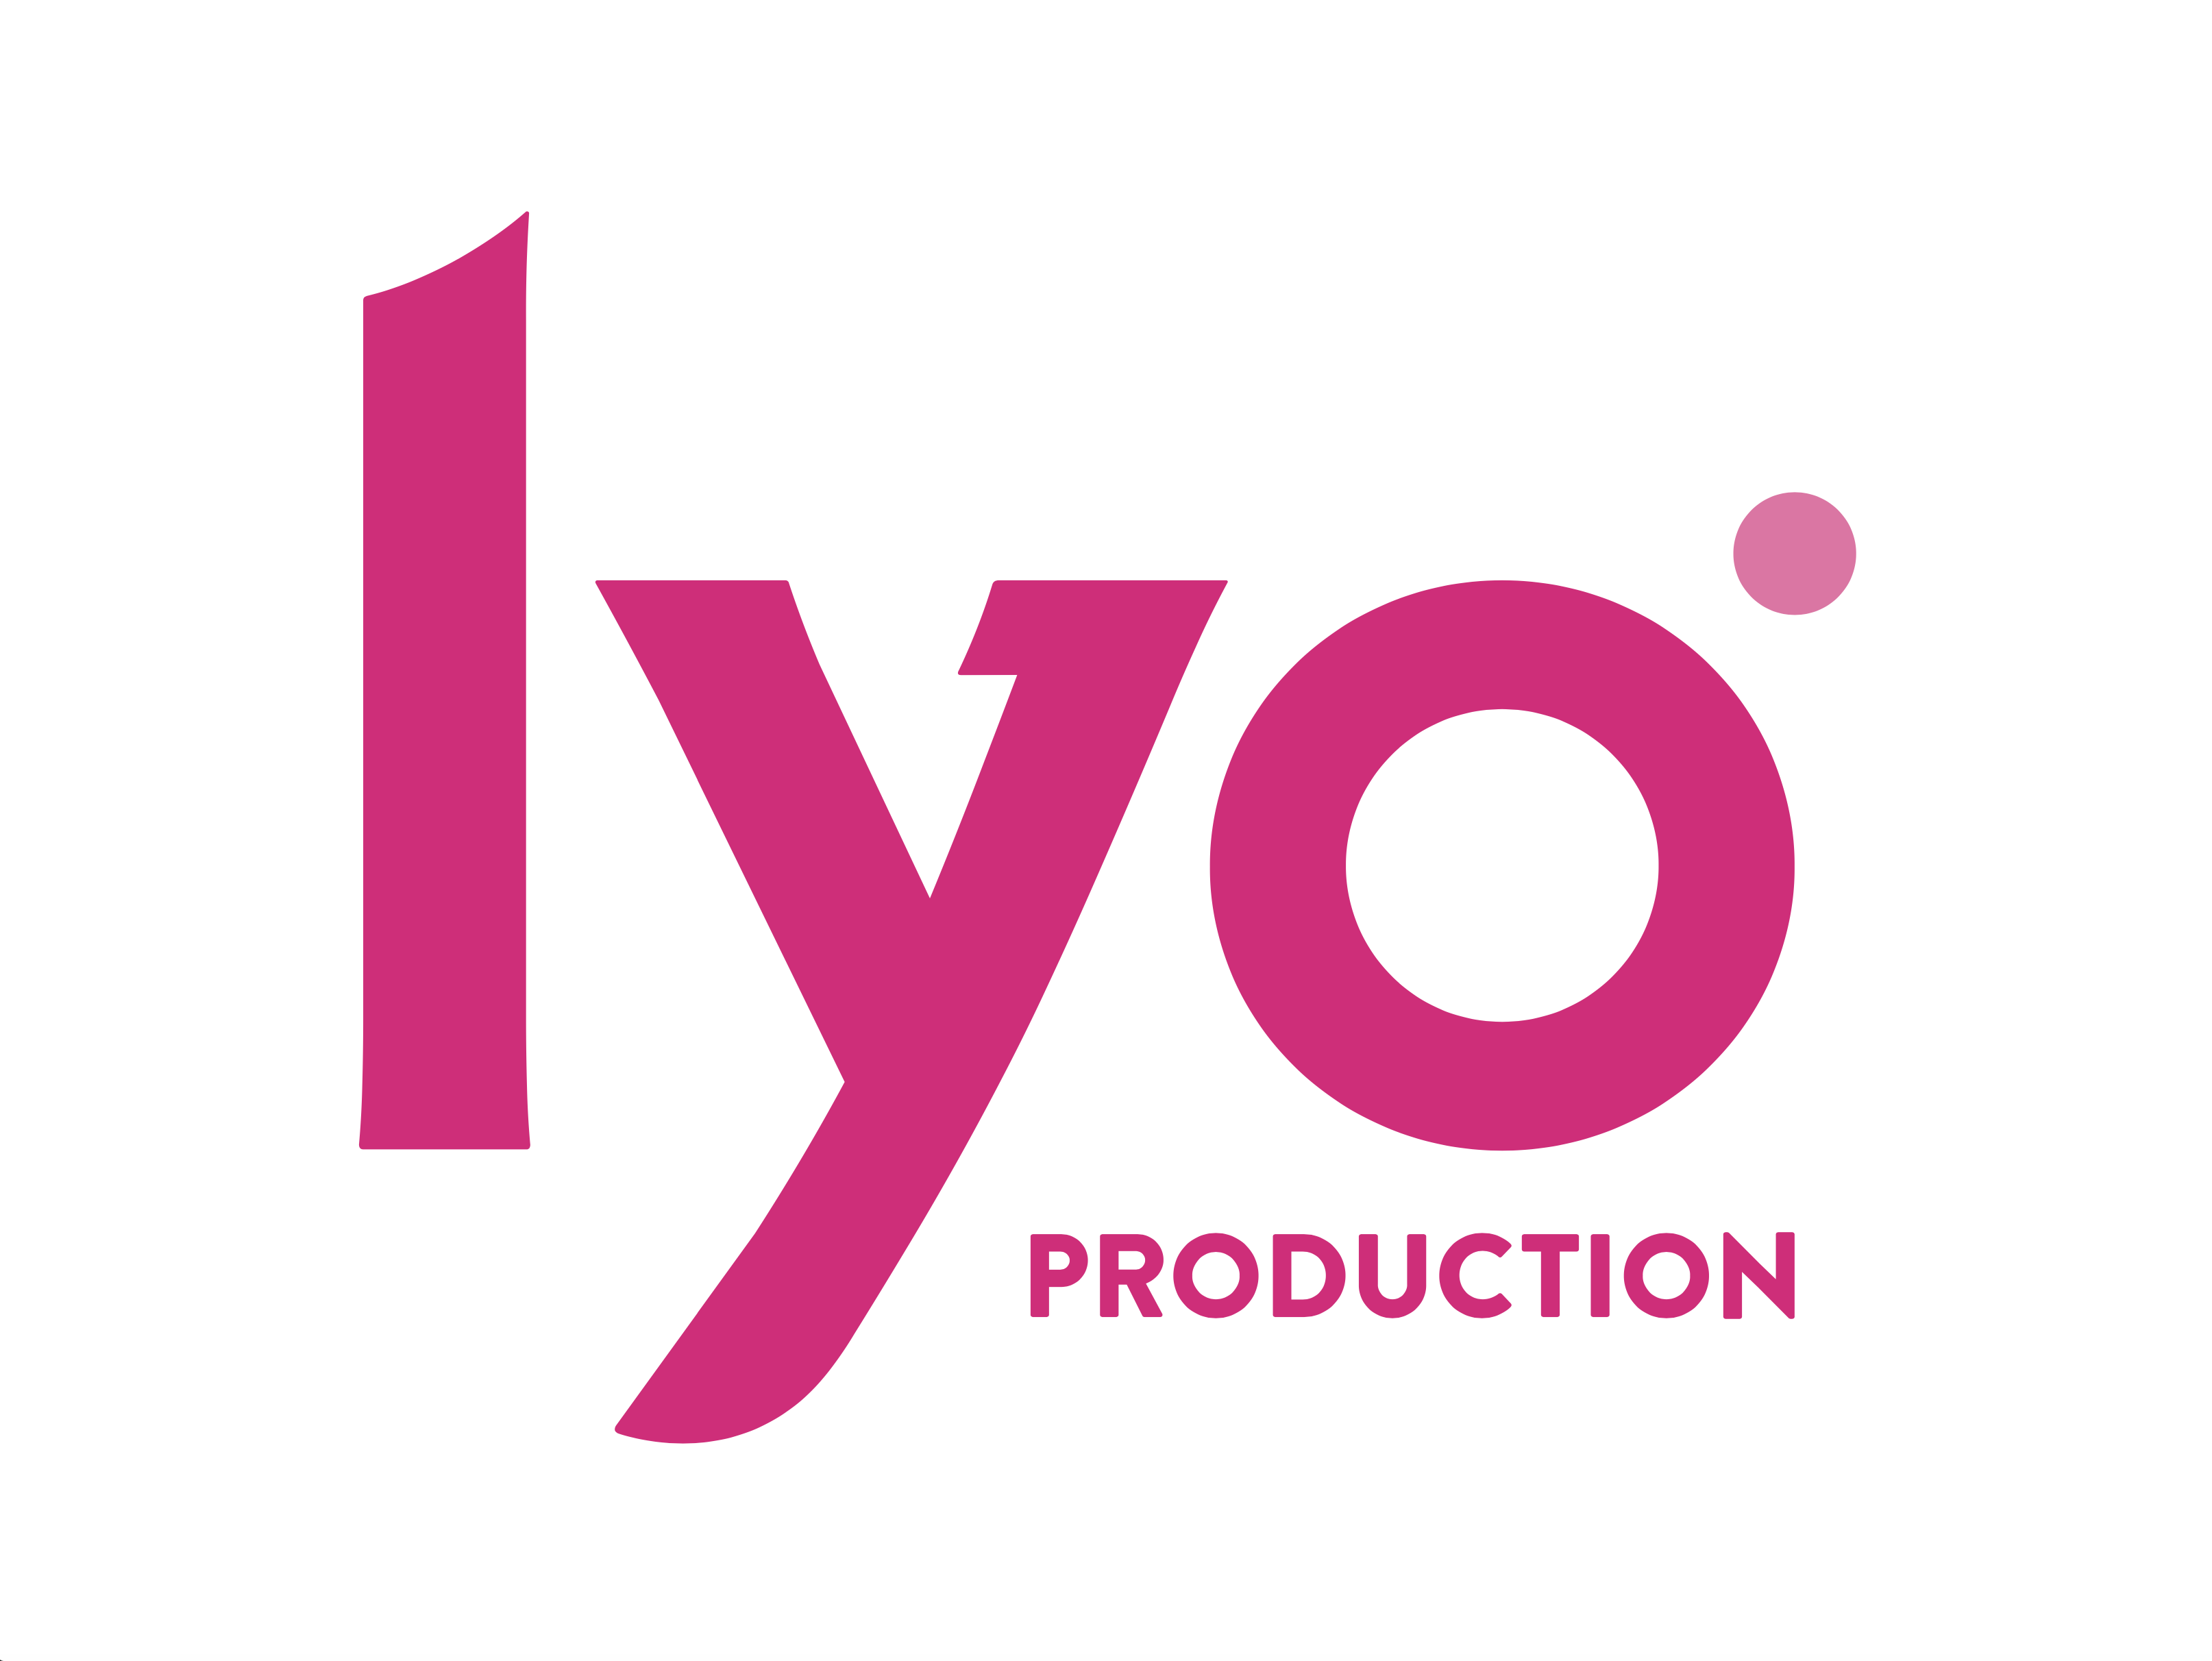 Lyo production